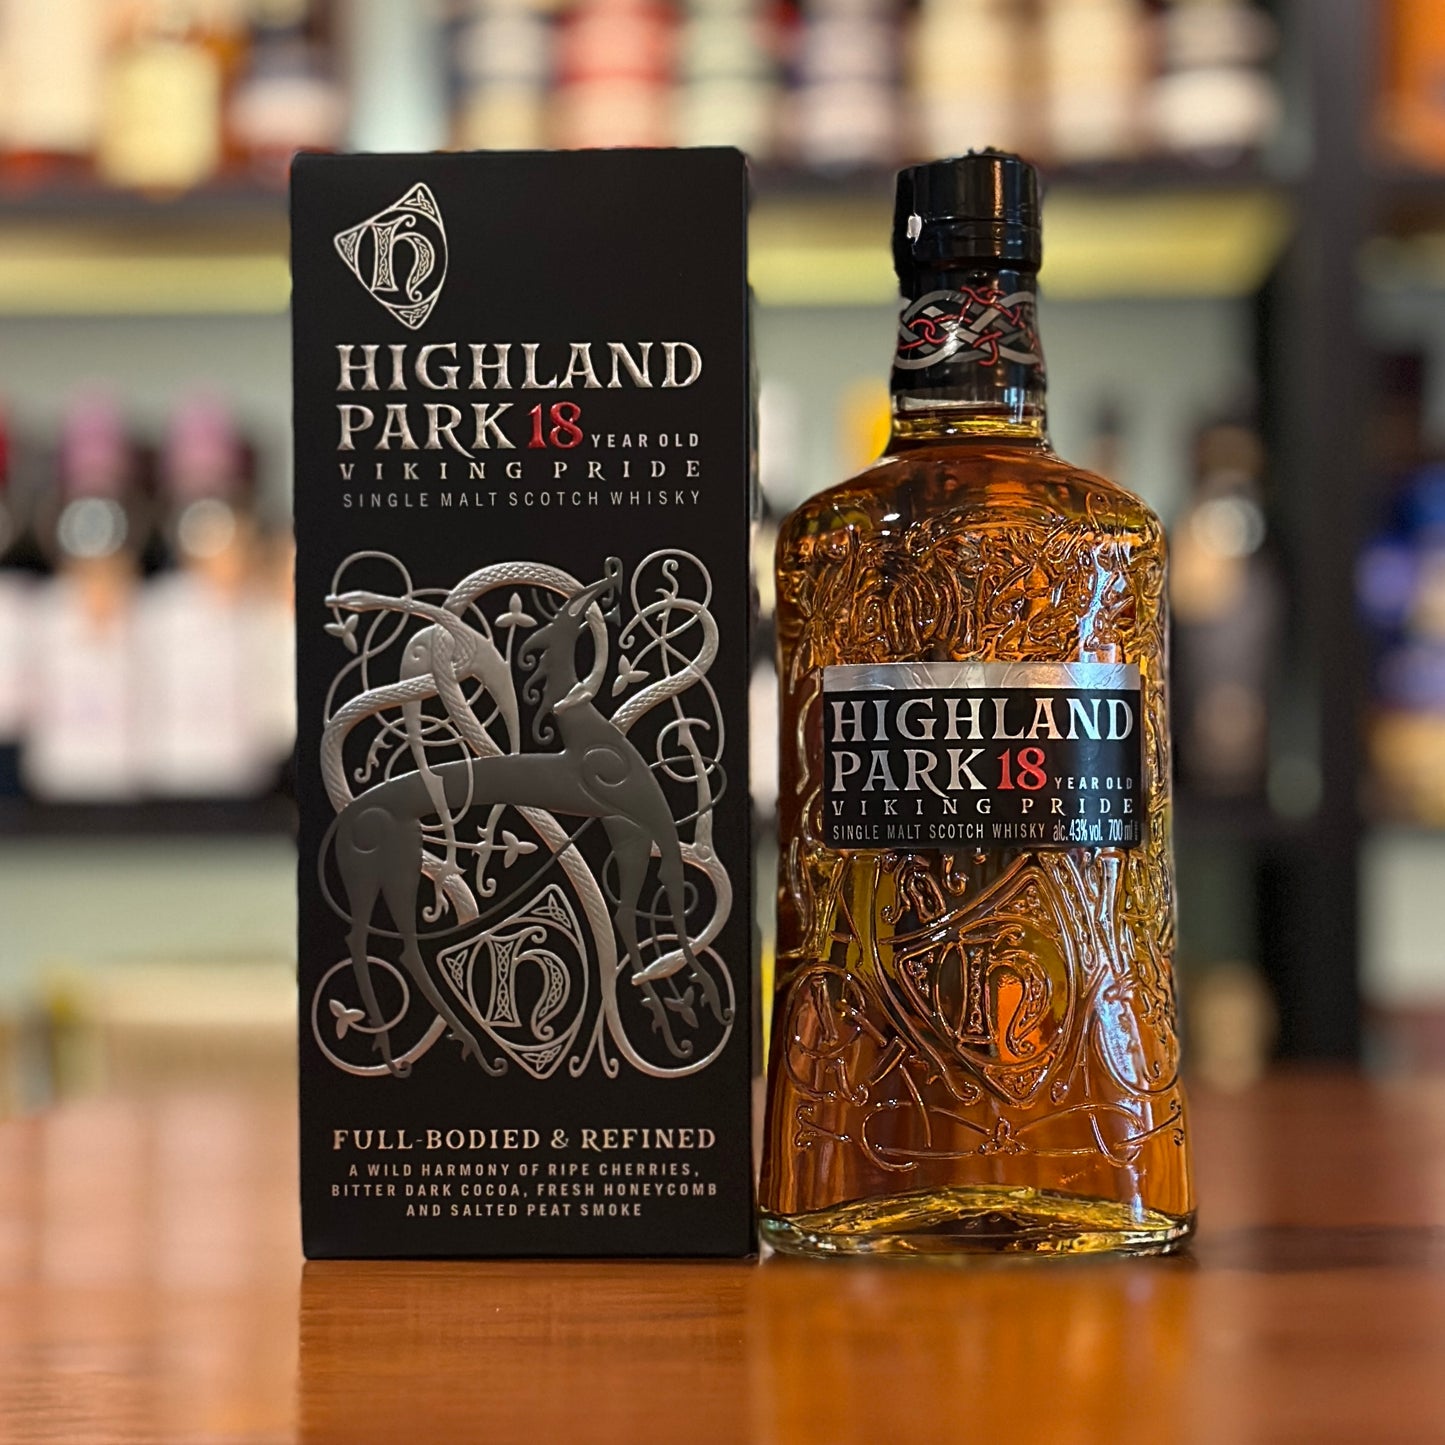 Highland Park 18 Year Old Single Malt Scotch Whisky